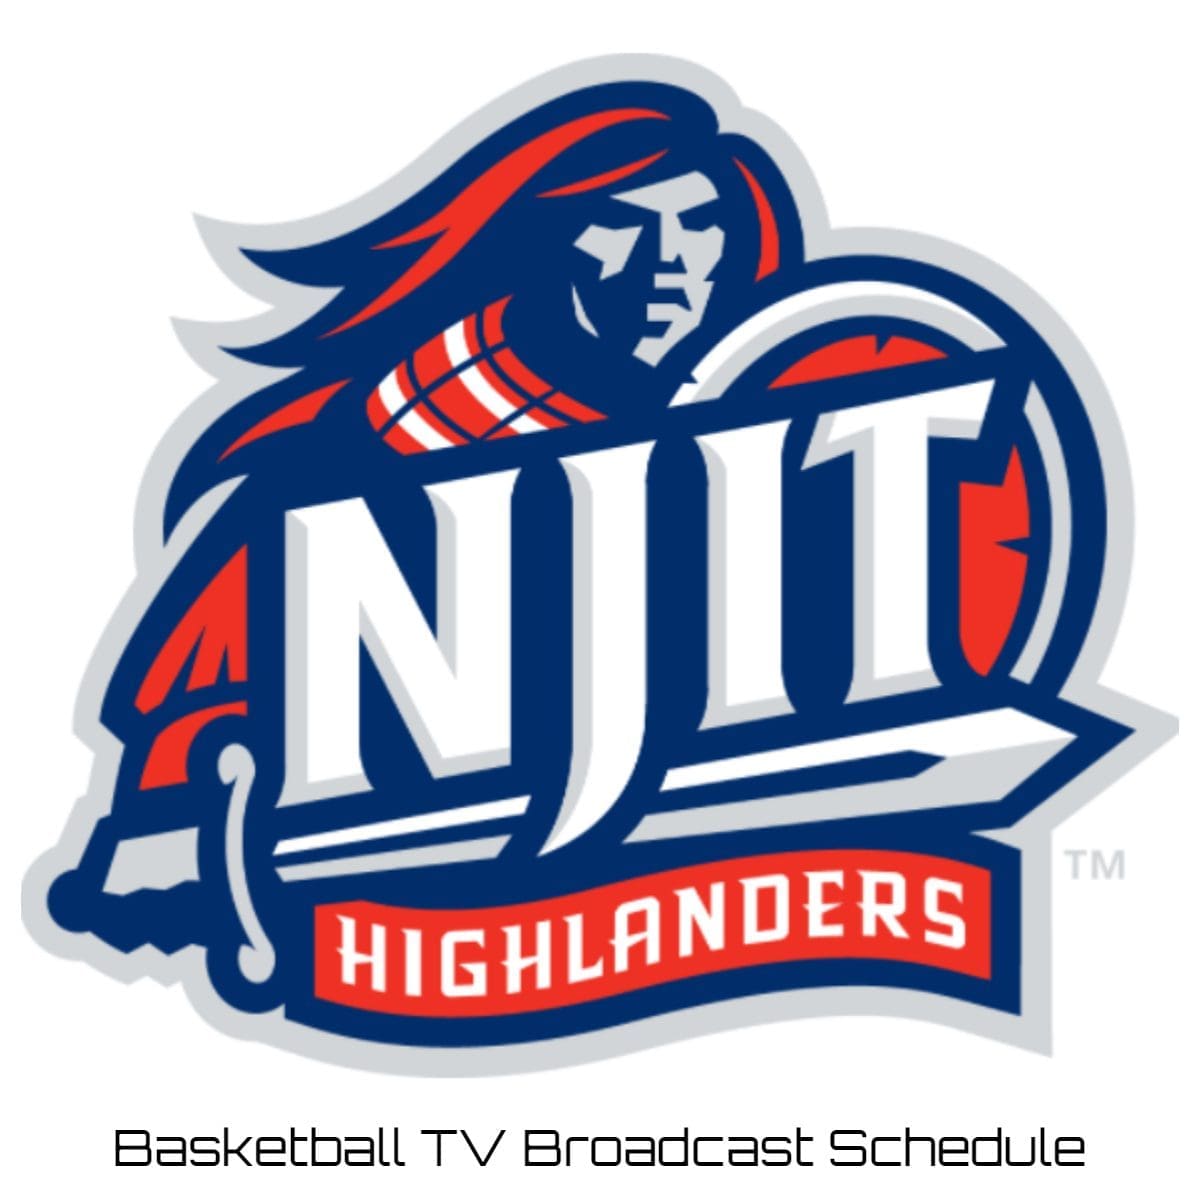 NJIT Highlanders Basketball TV Broadcast Schedule